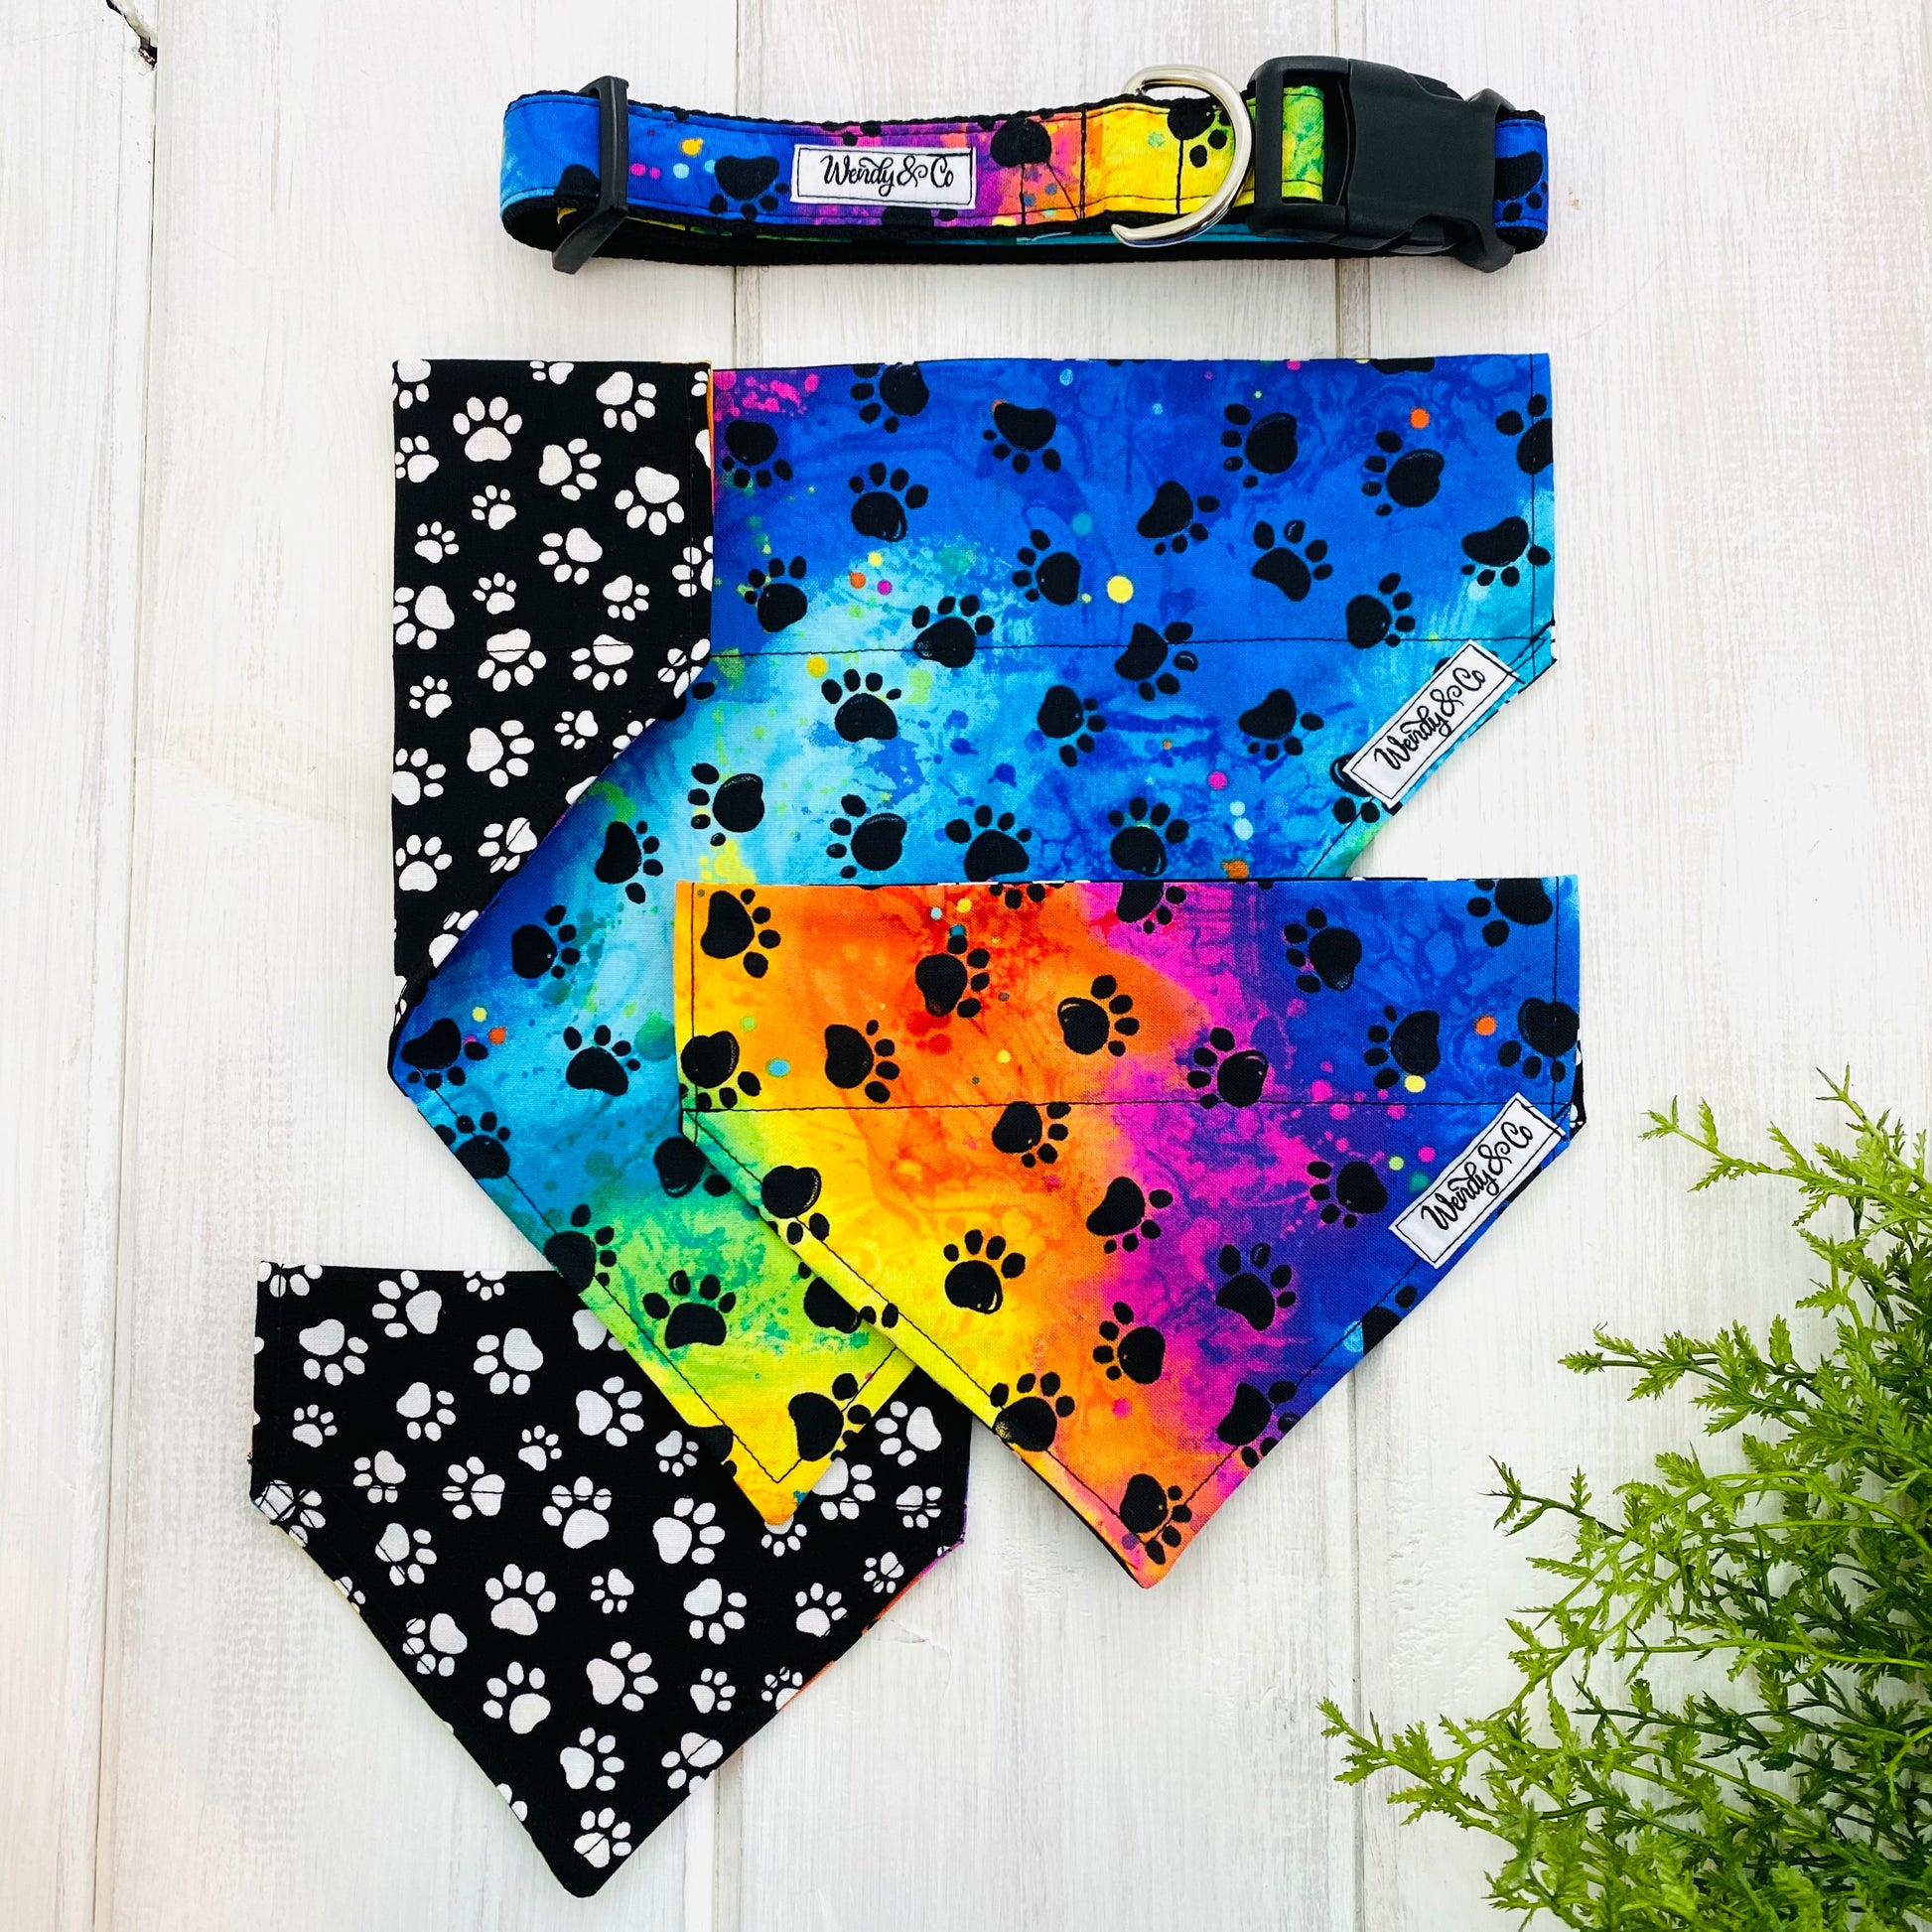 Bright tie dye fabric with black paws handmade into dog collar and bandanas.